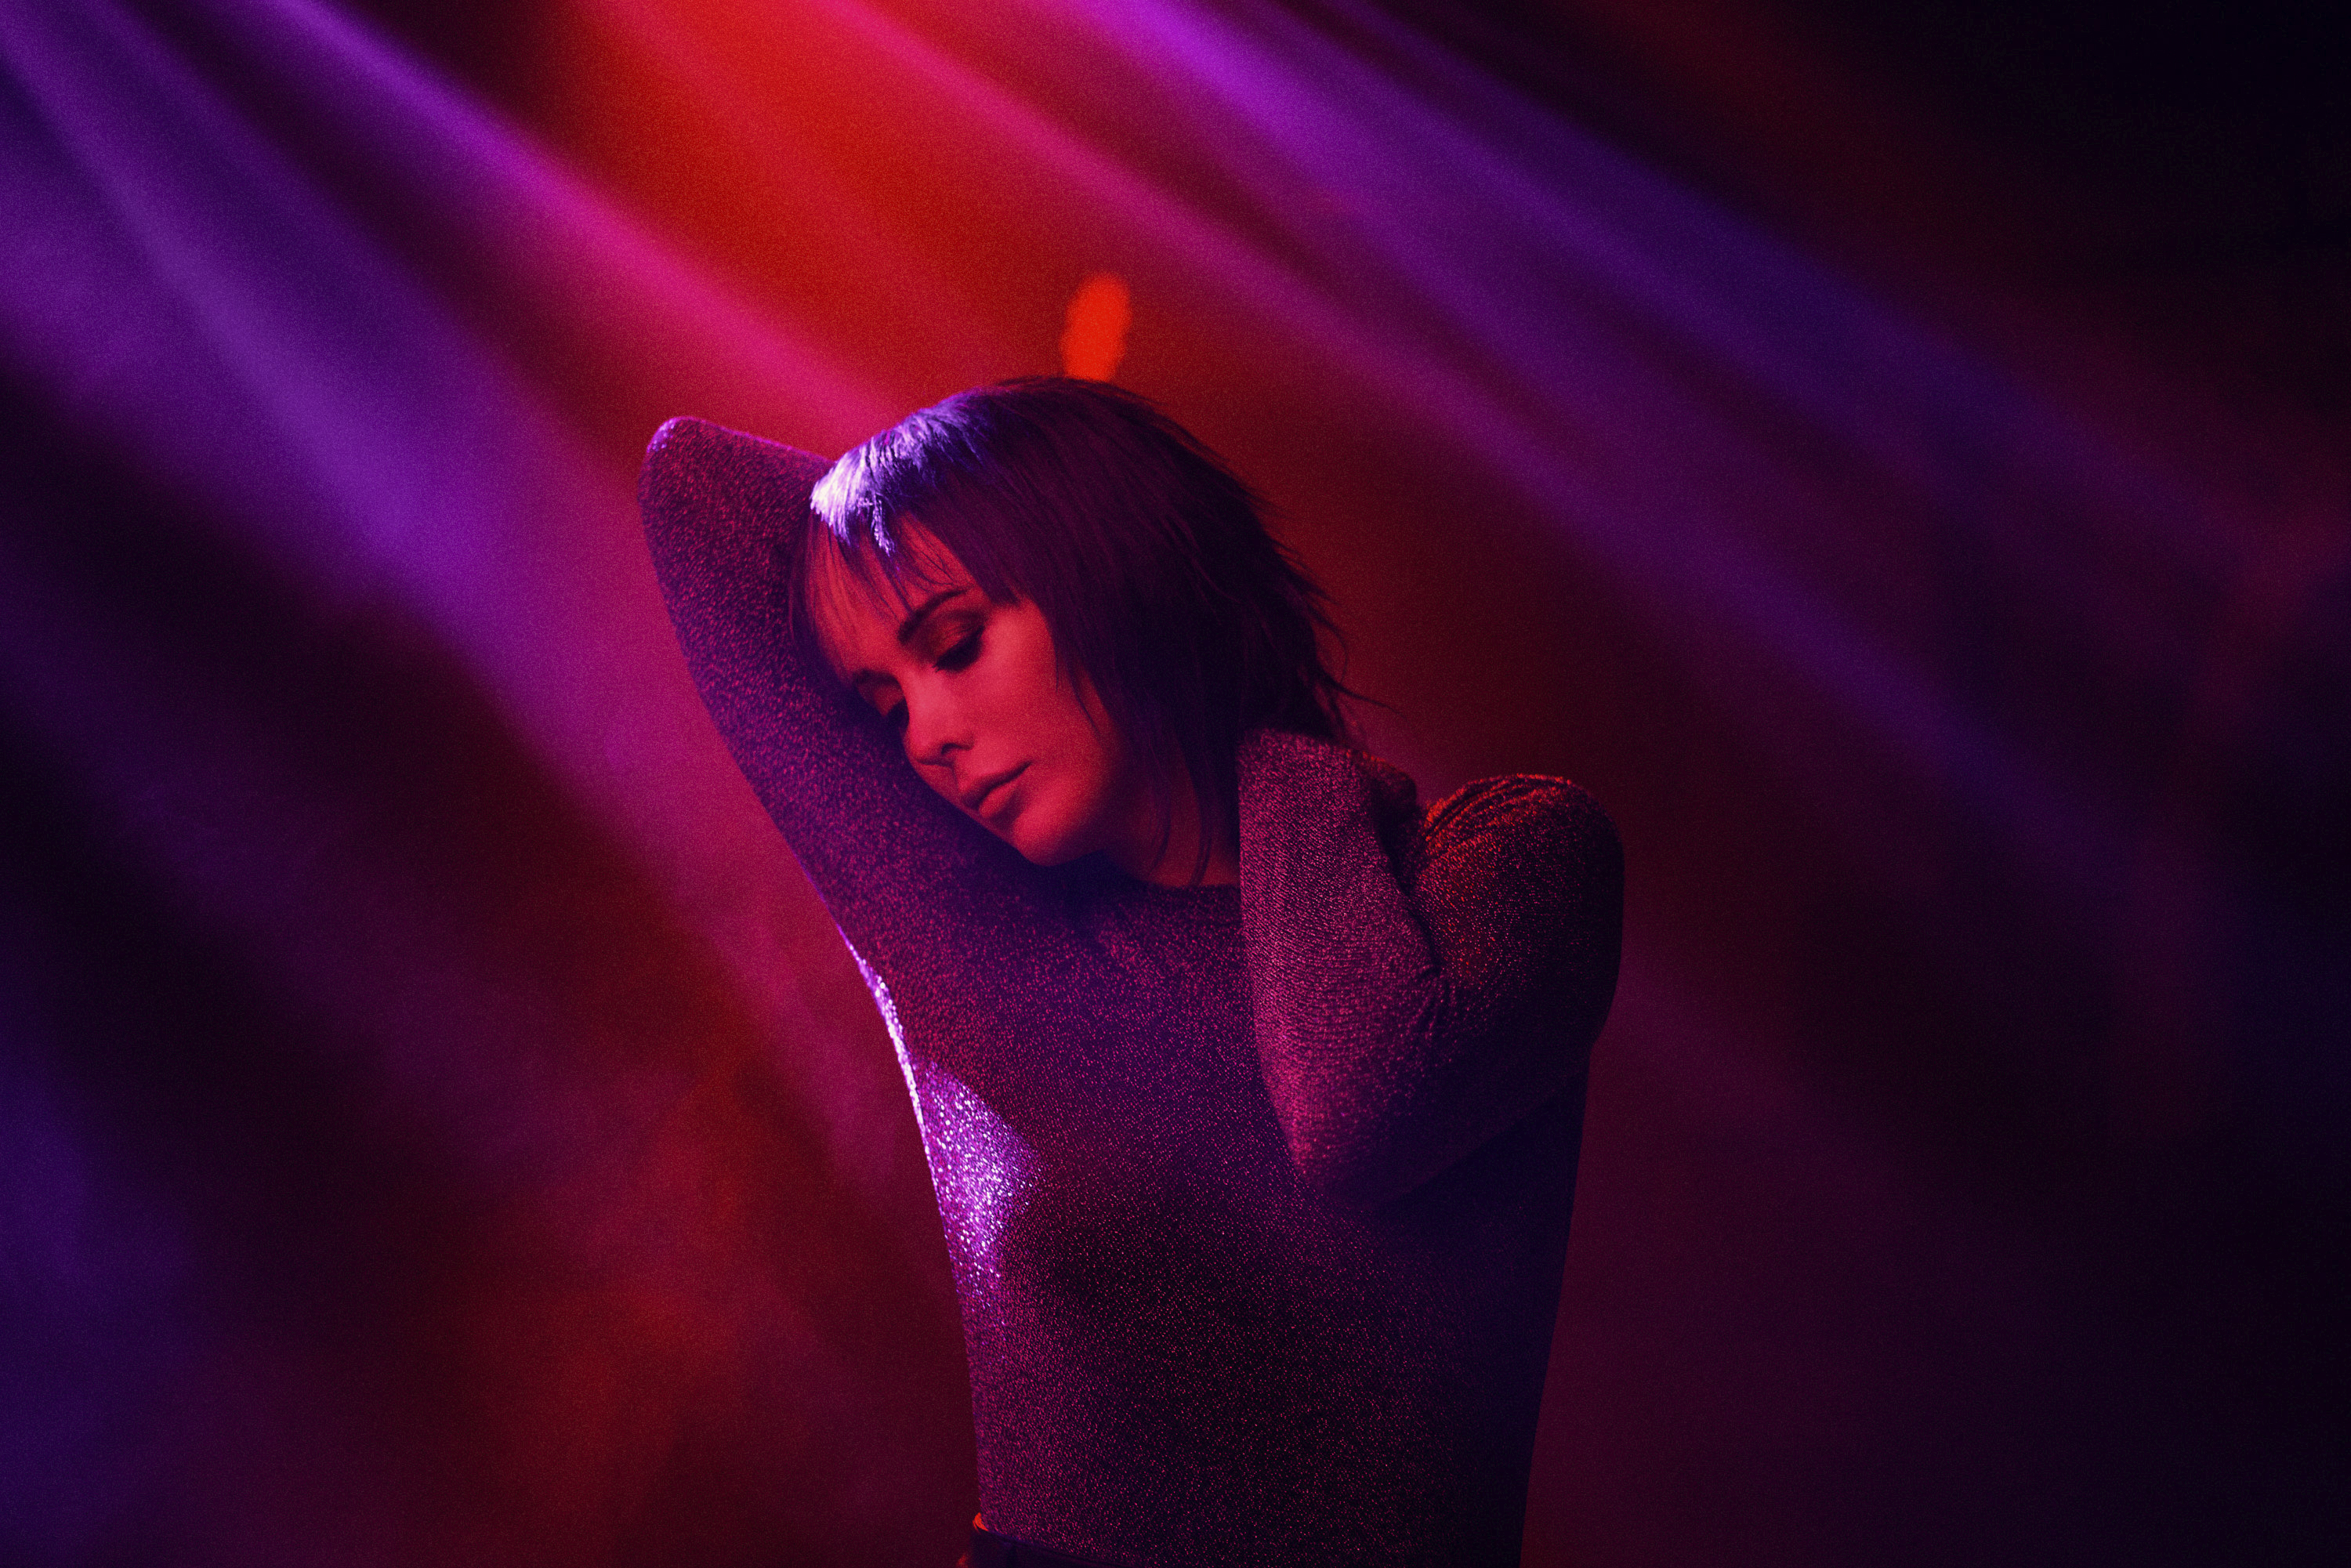 Paris Lees dancing in a black top against red and purple light